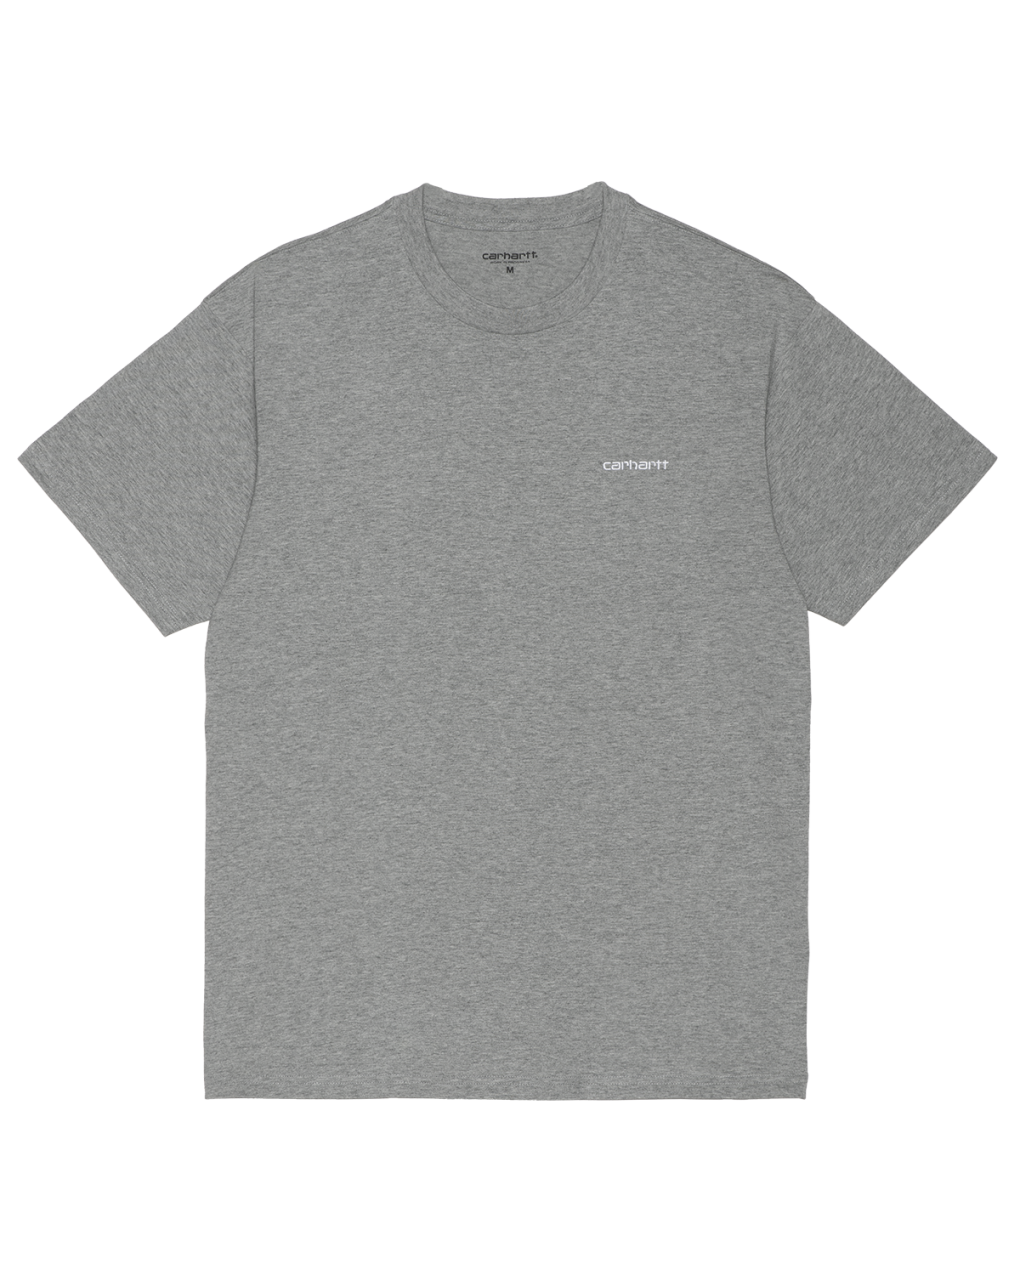 Sidewalk Skateshop - T-shirts - Carhartt WIP - S/S Script Embroidery